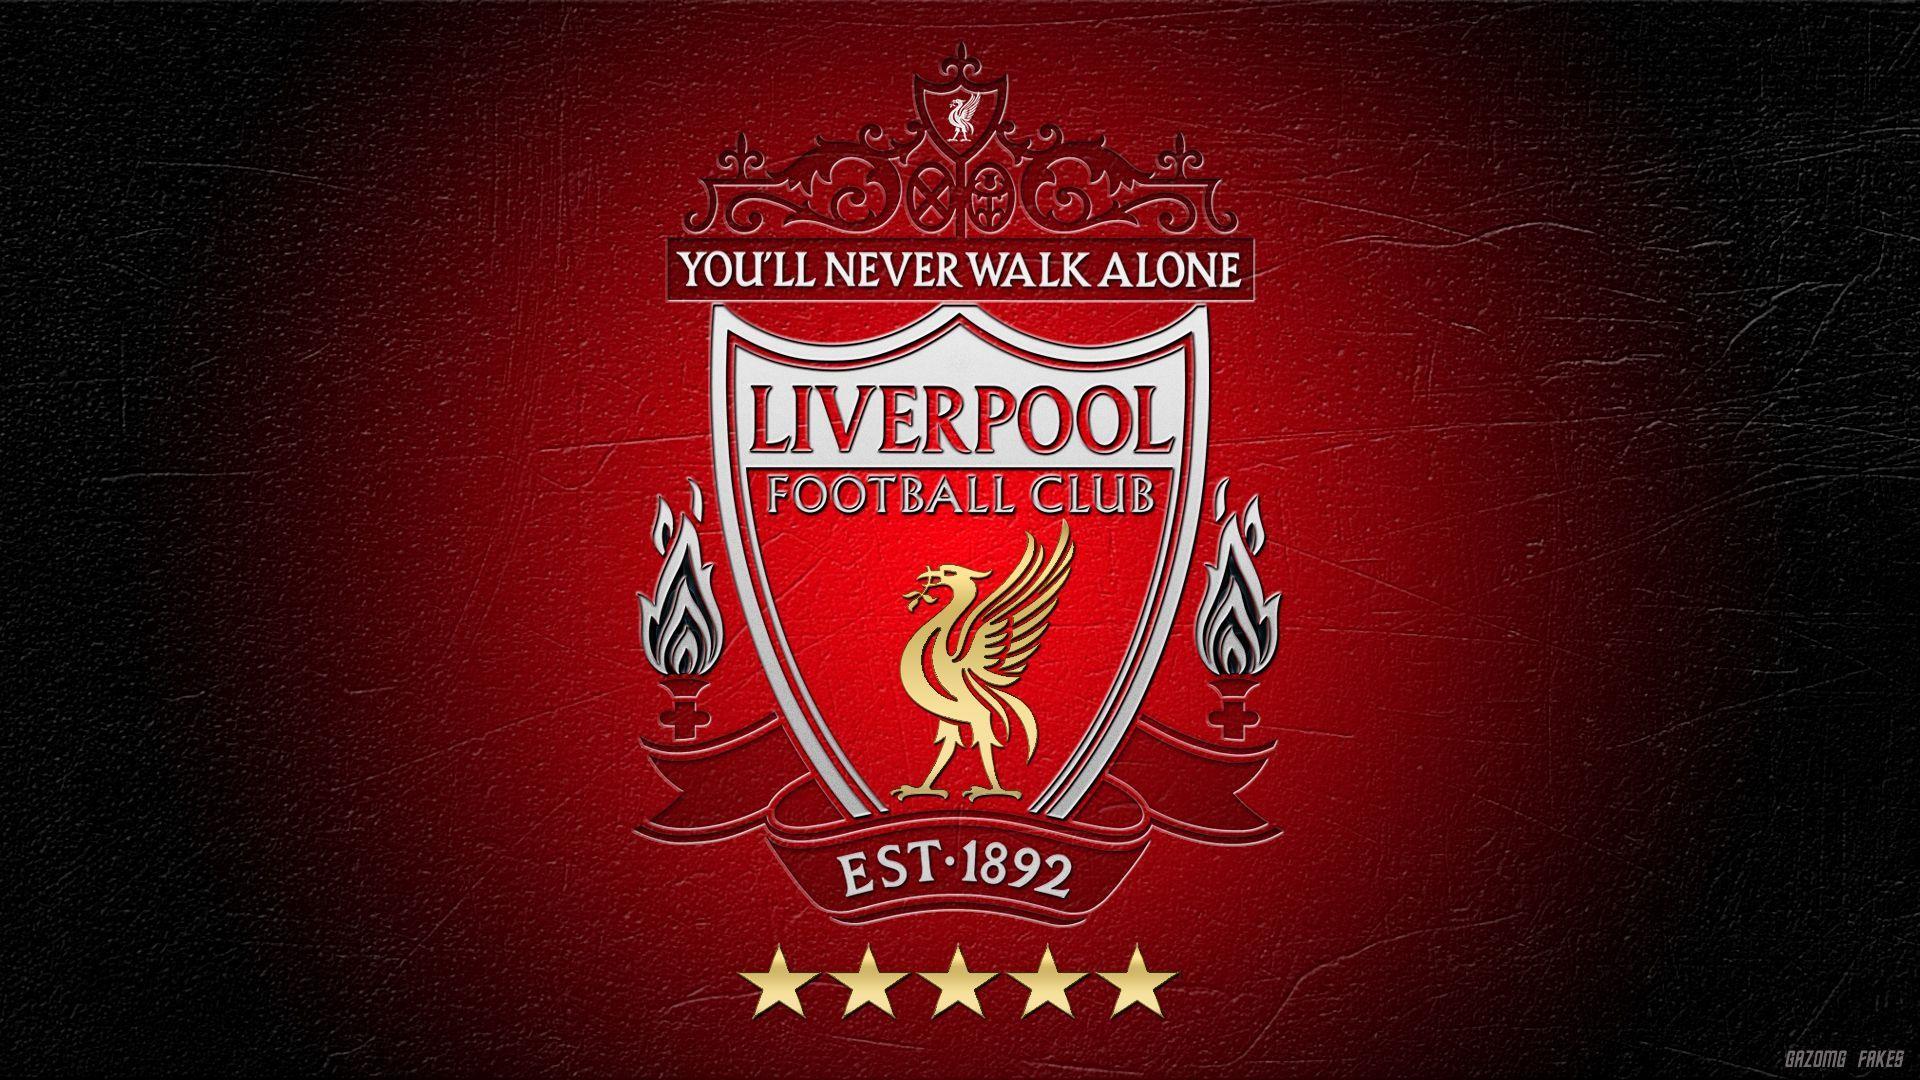 Liverpool F C Wallpaper in HD quality, 1.23 mb